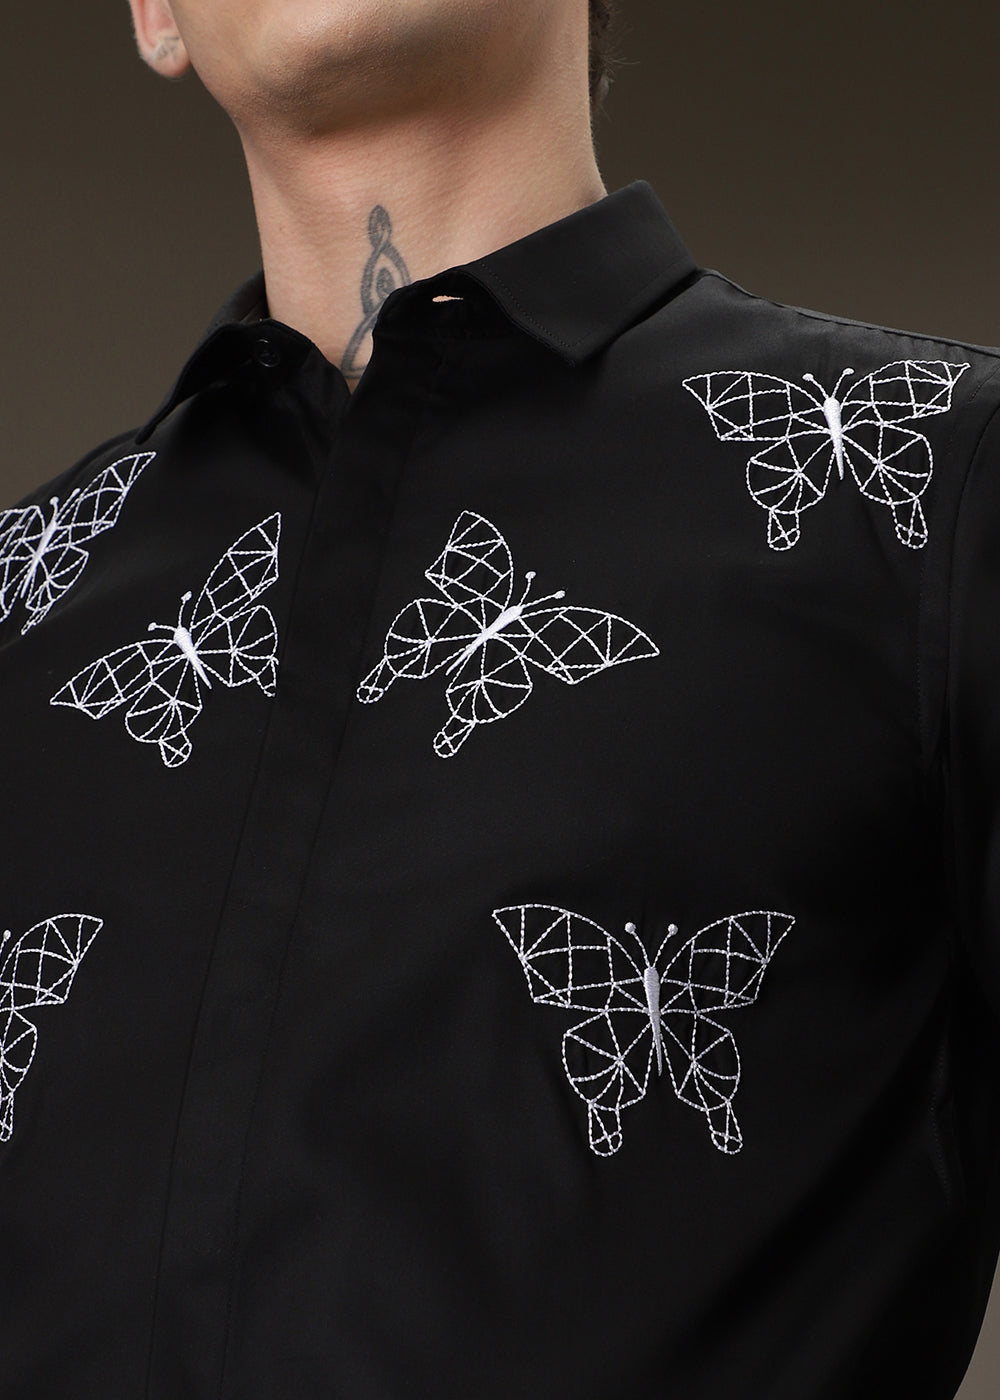 Flutter Embroidery Black Shirt